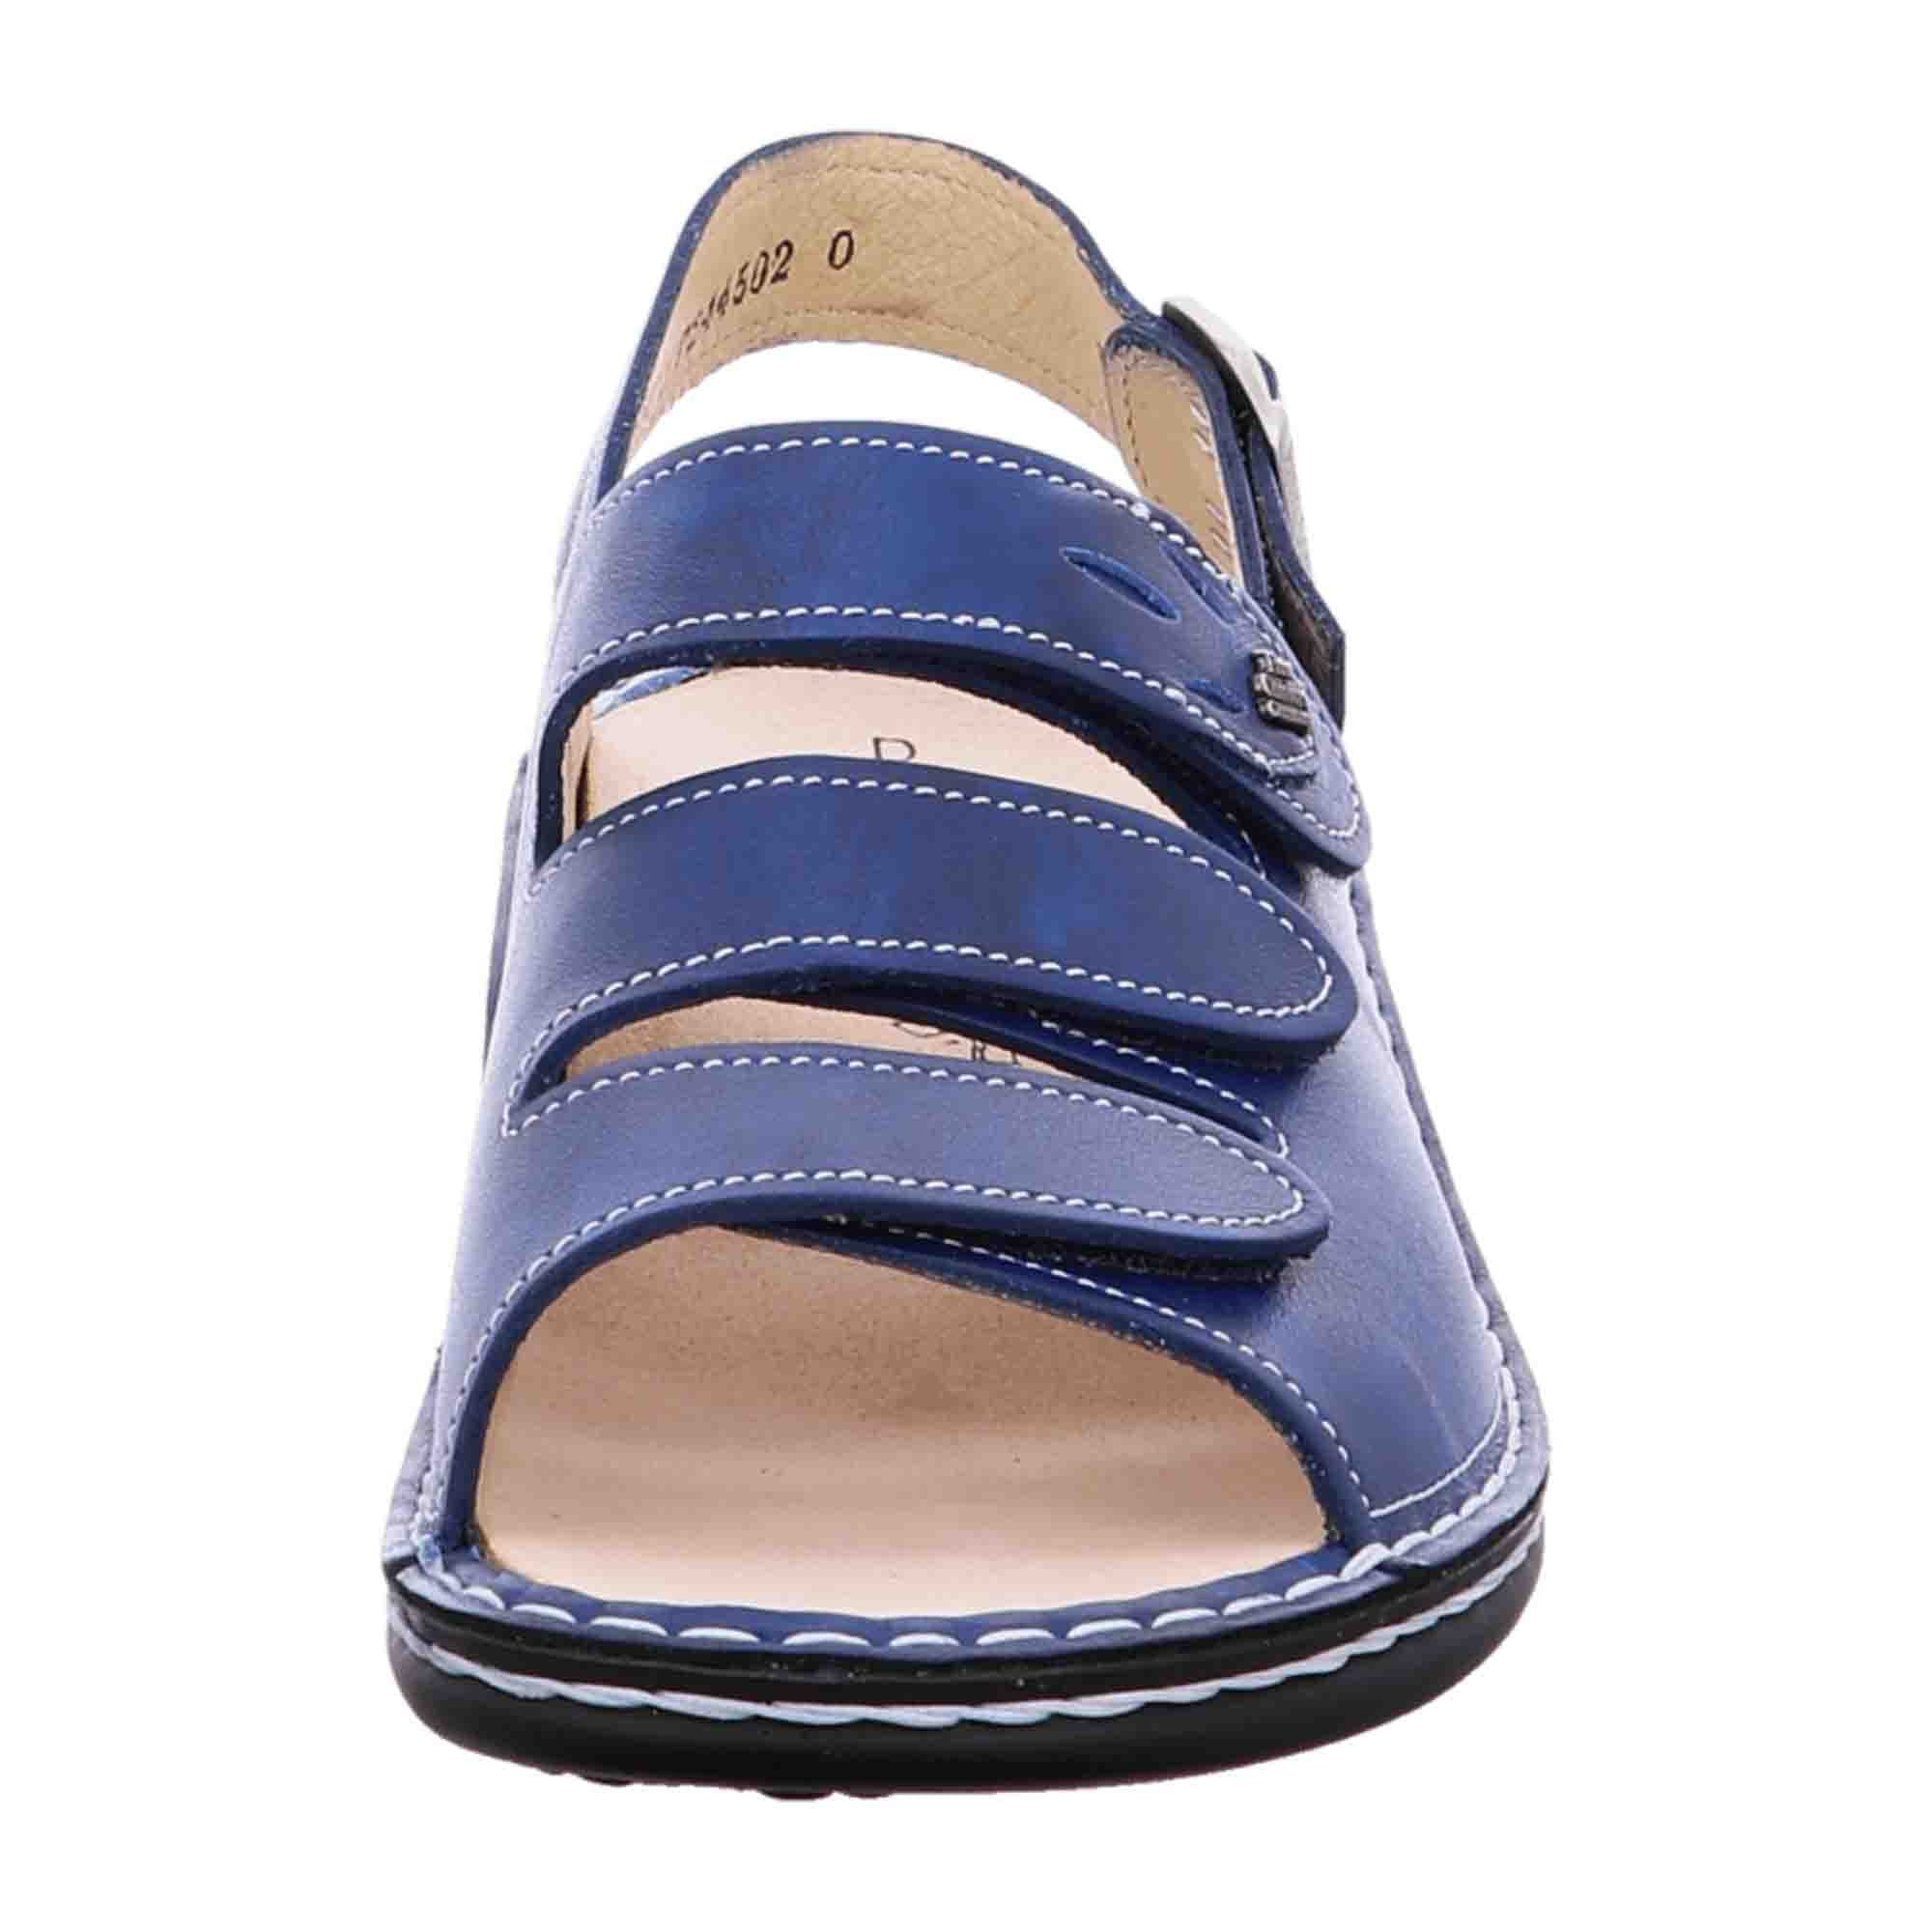 Finn Comfort Saloniki Women's Comfort Sandals - Stylish Blue